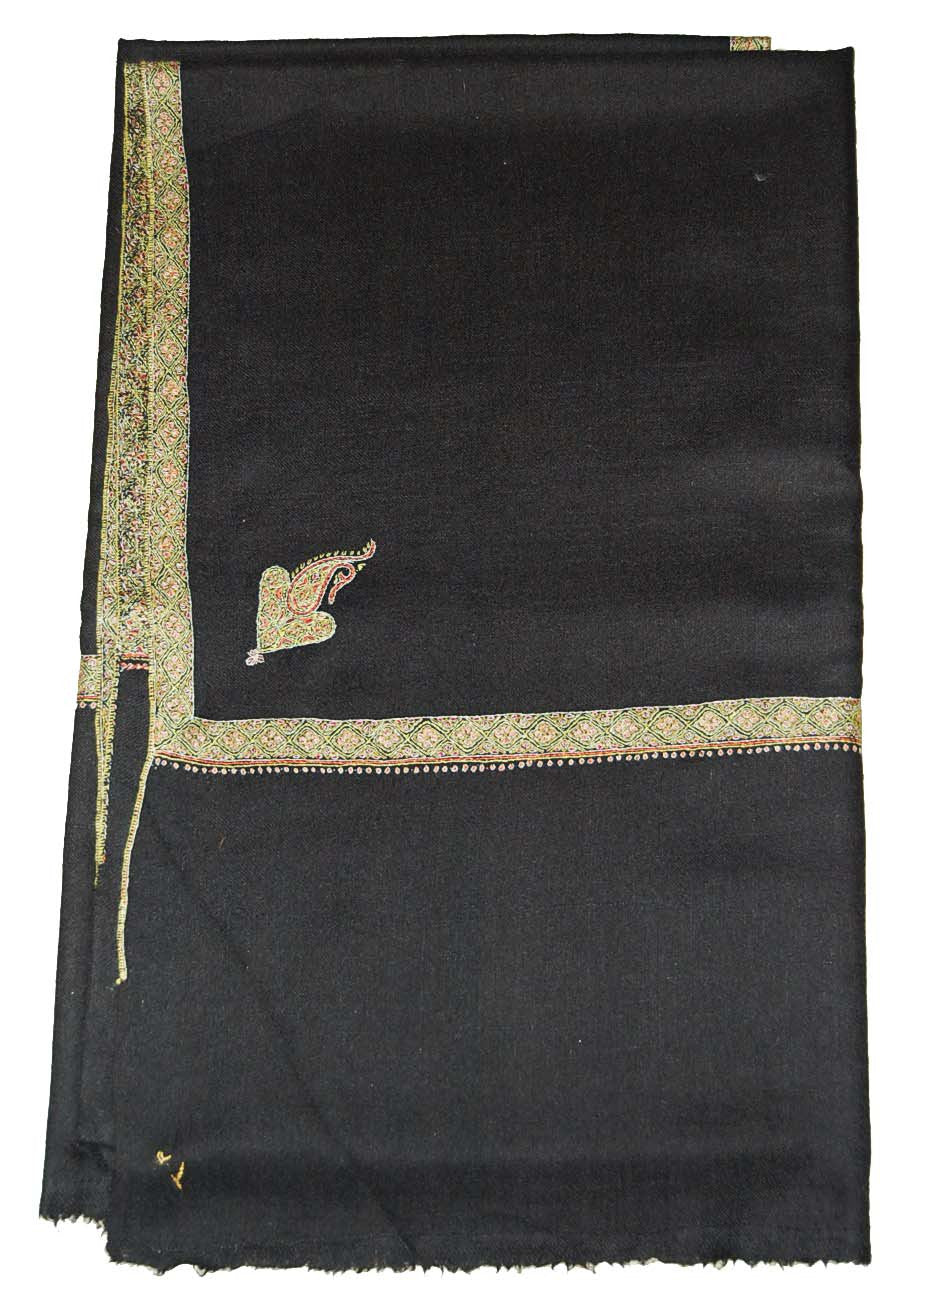 Kashmir Pashmina "Cashmere" Embroidered Shawl Black, Multicolor #PDR-001